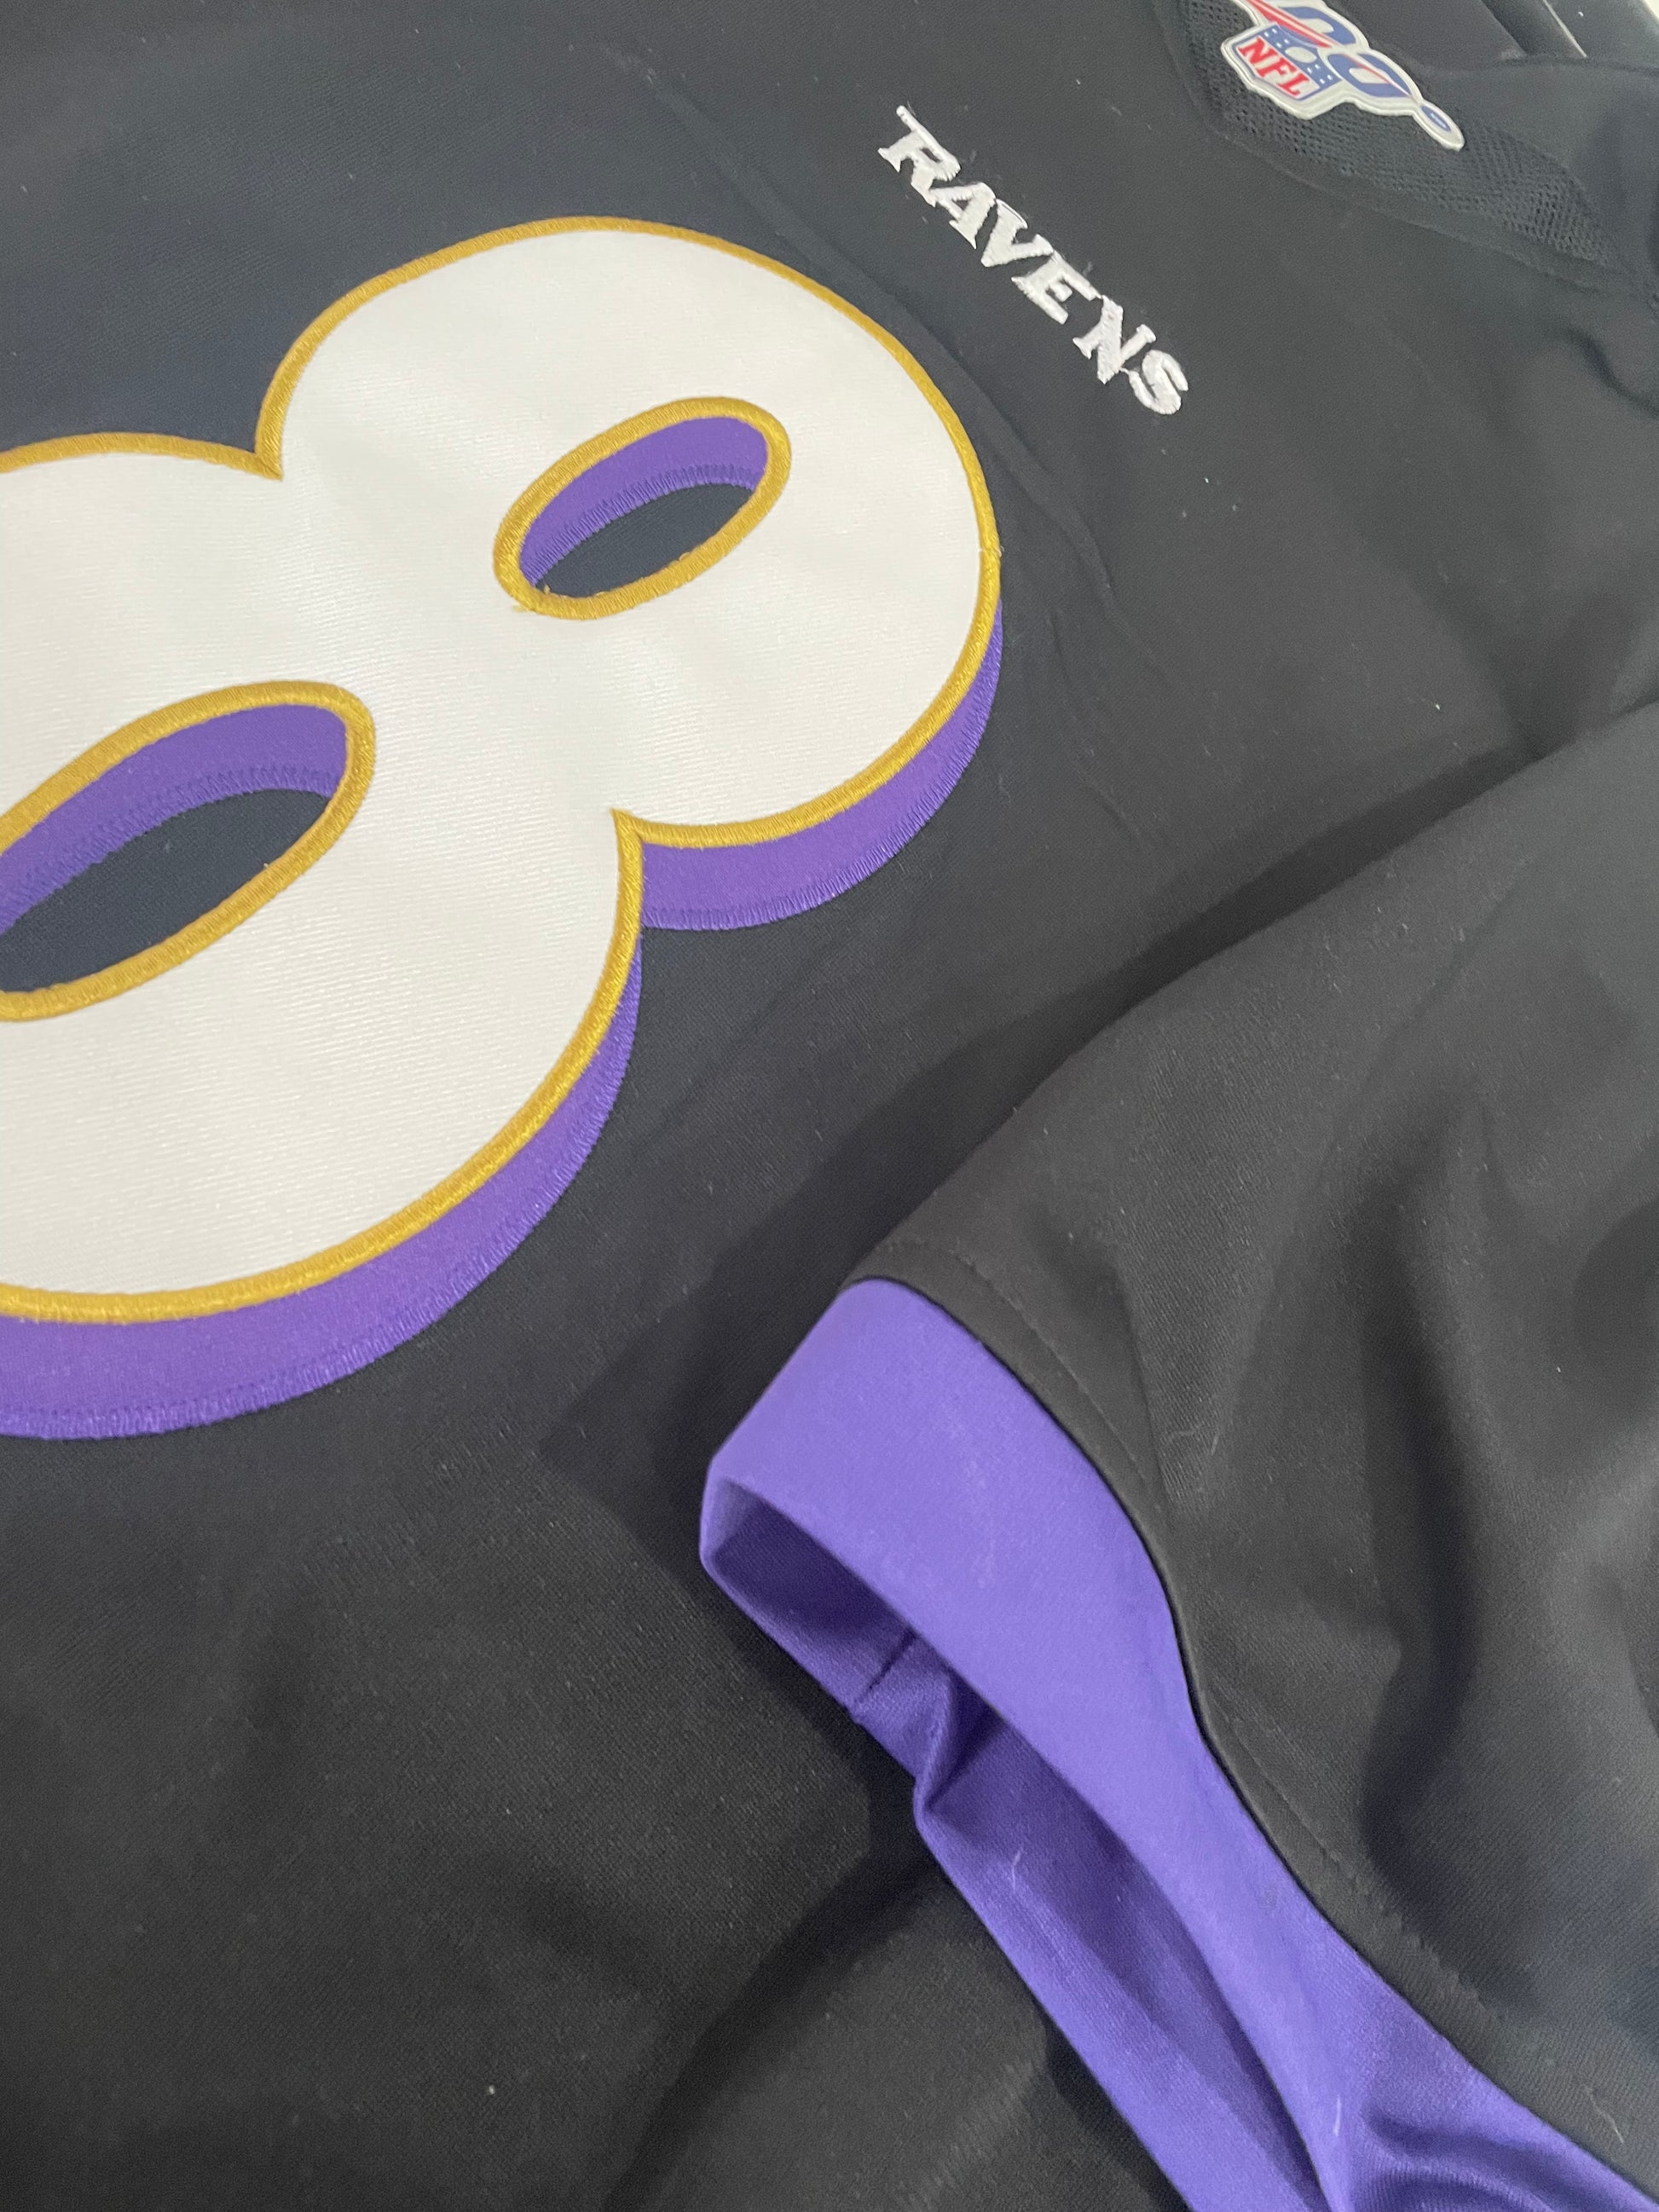 Baltimore Ravens Lamar Jackson Vapor Limited Stitched Black Jersey –  Lista's Locker Room